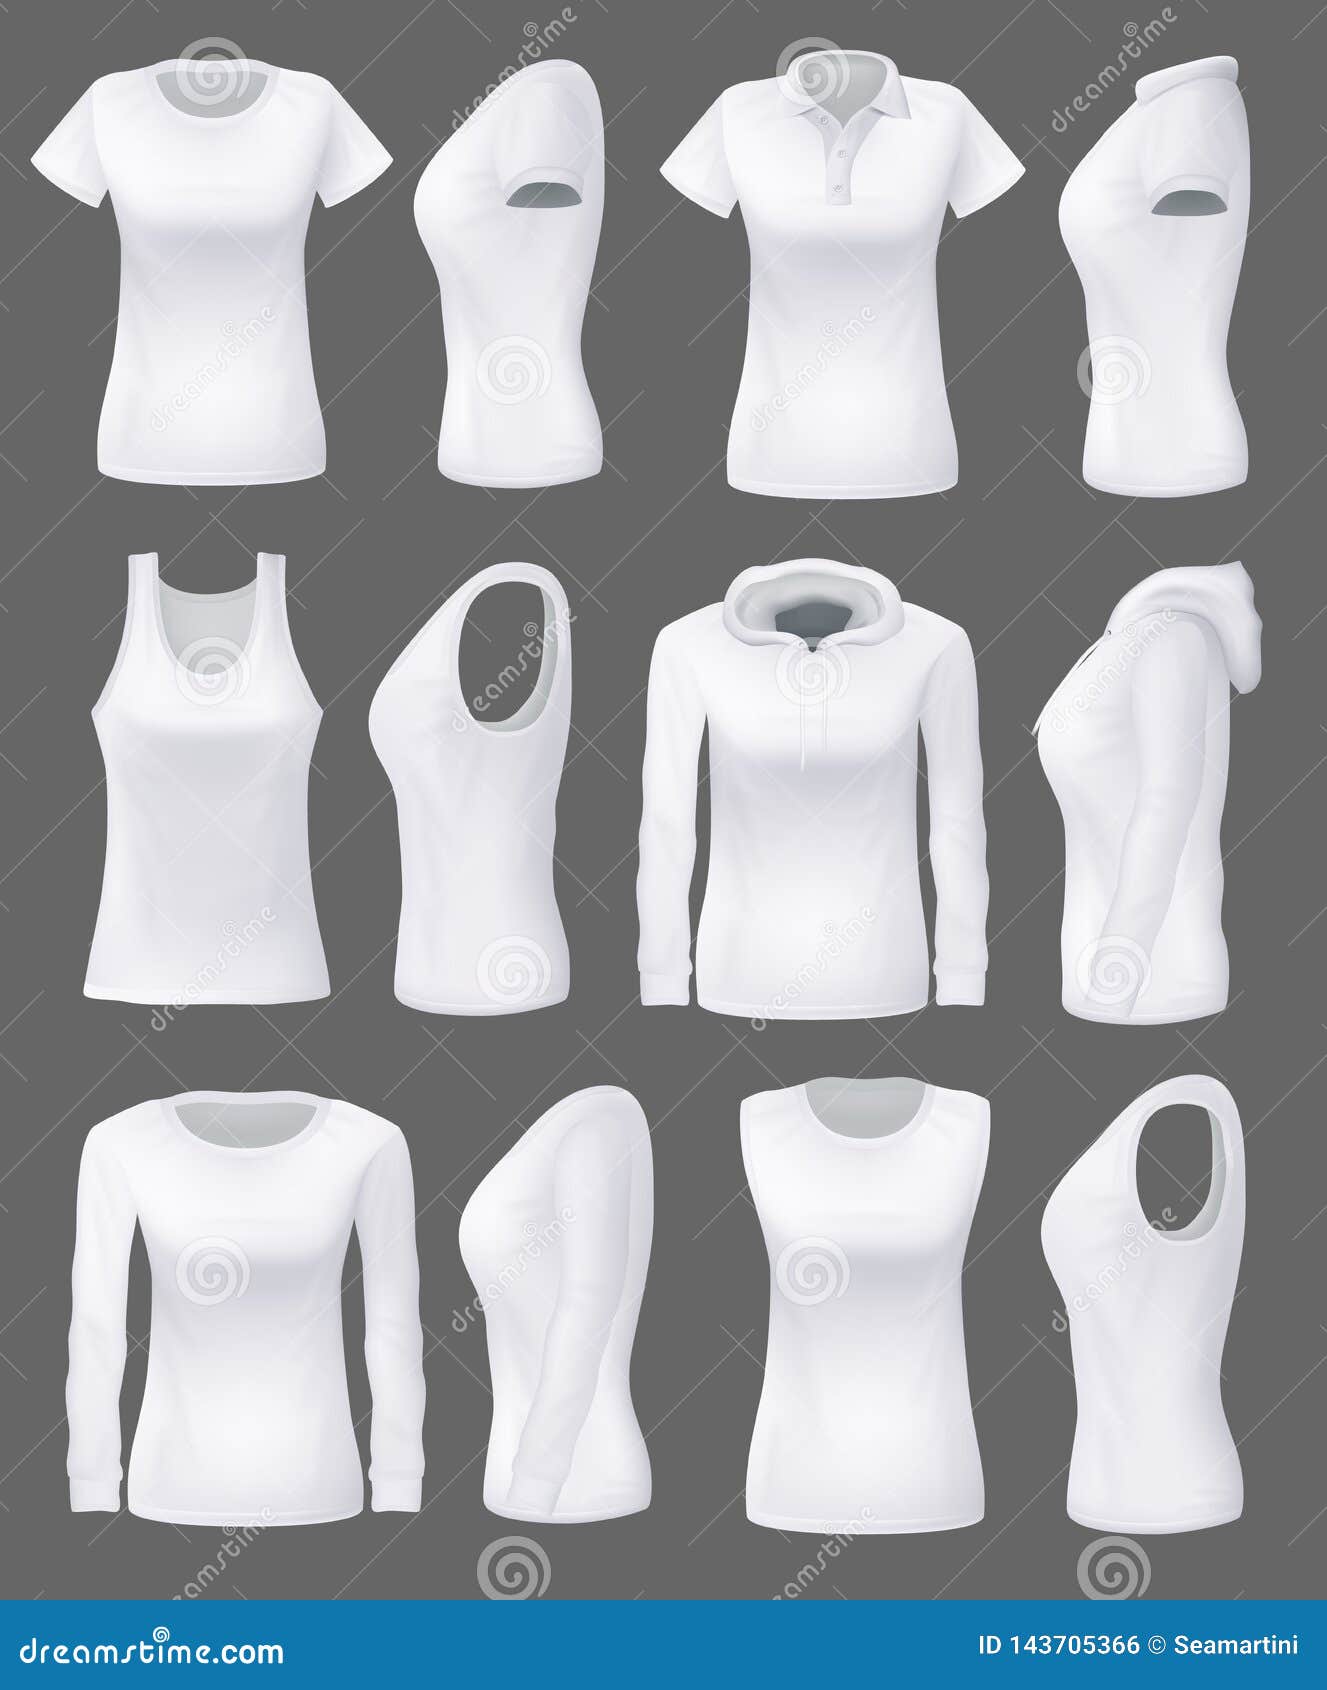 Download Woman Clothing Mockup Models, White Sport Shirts Stock ...